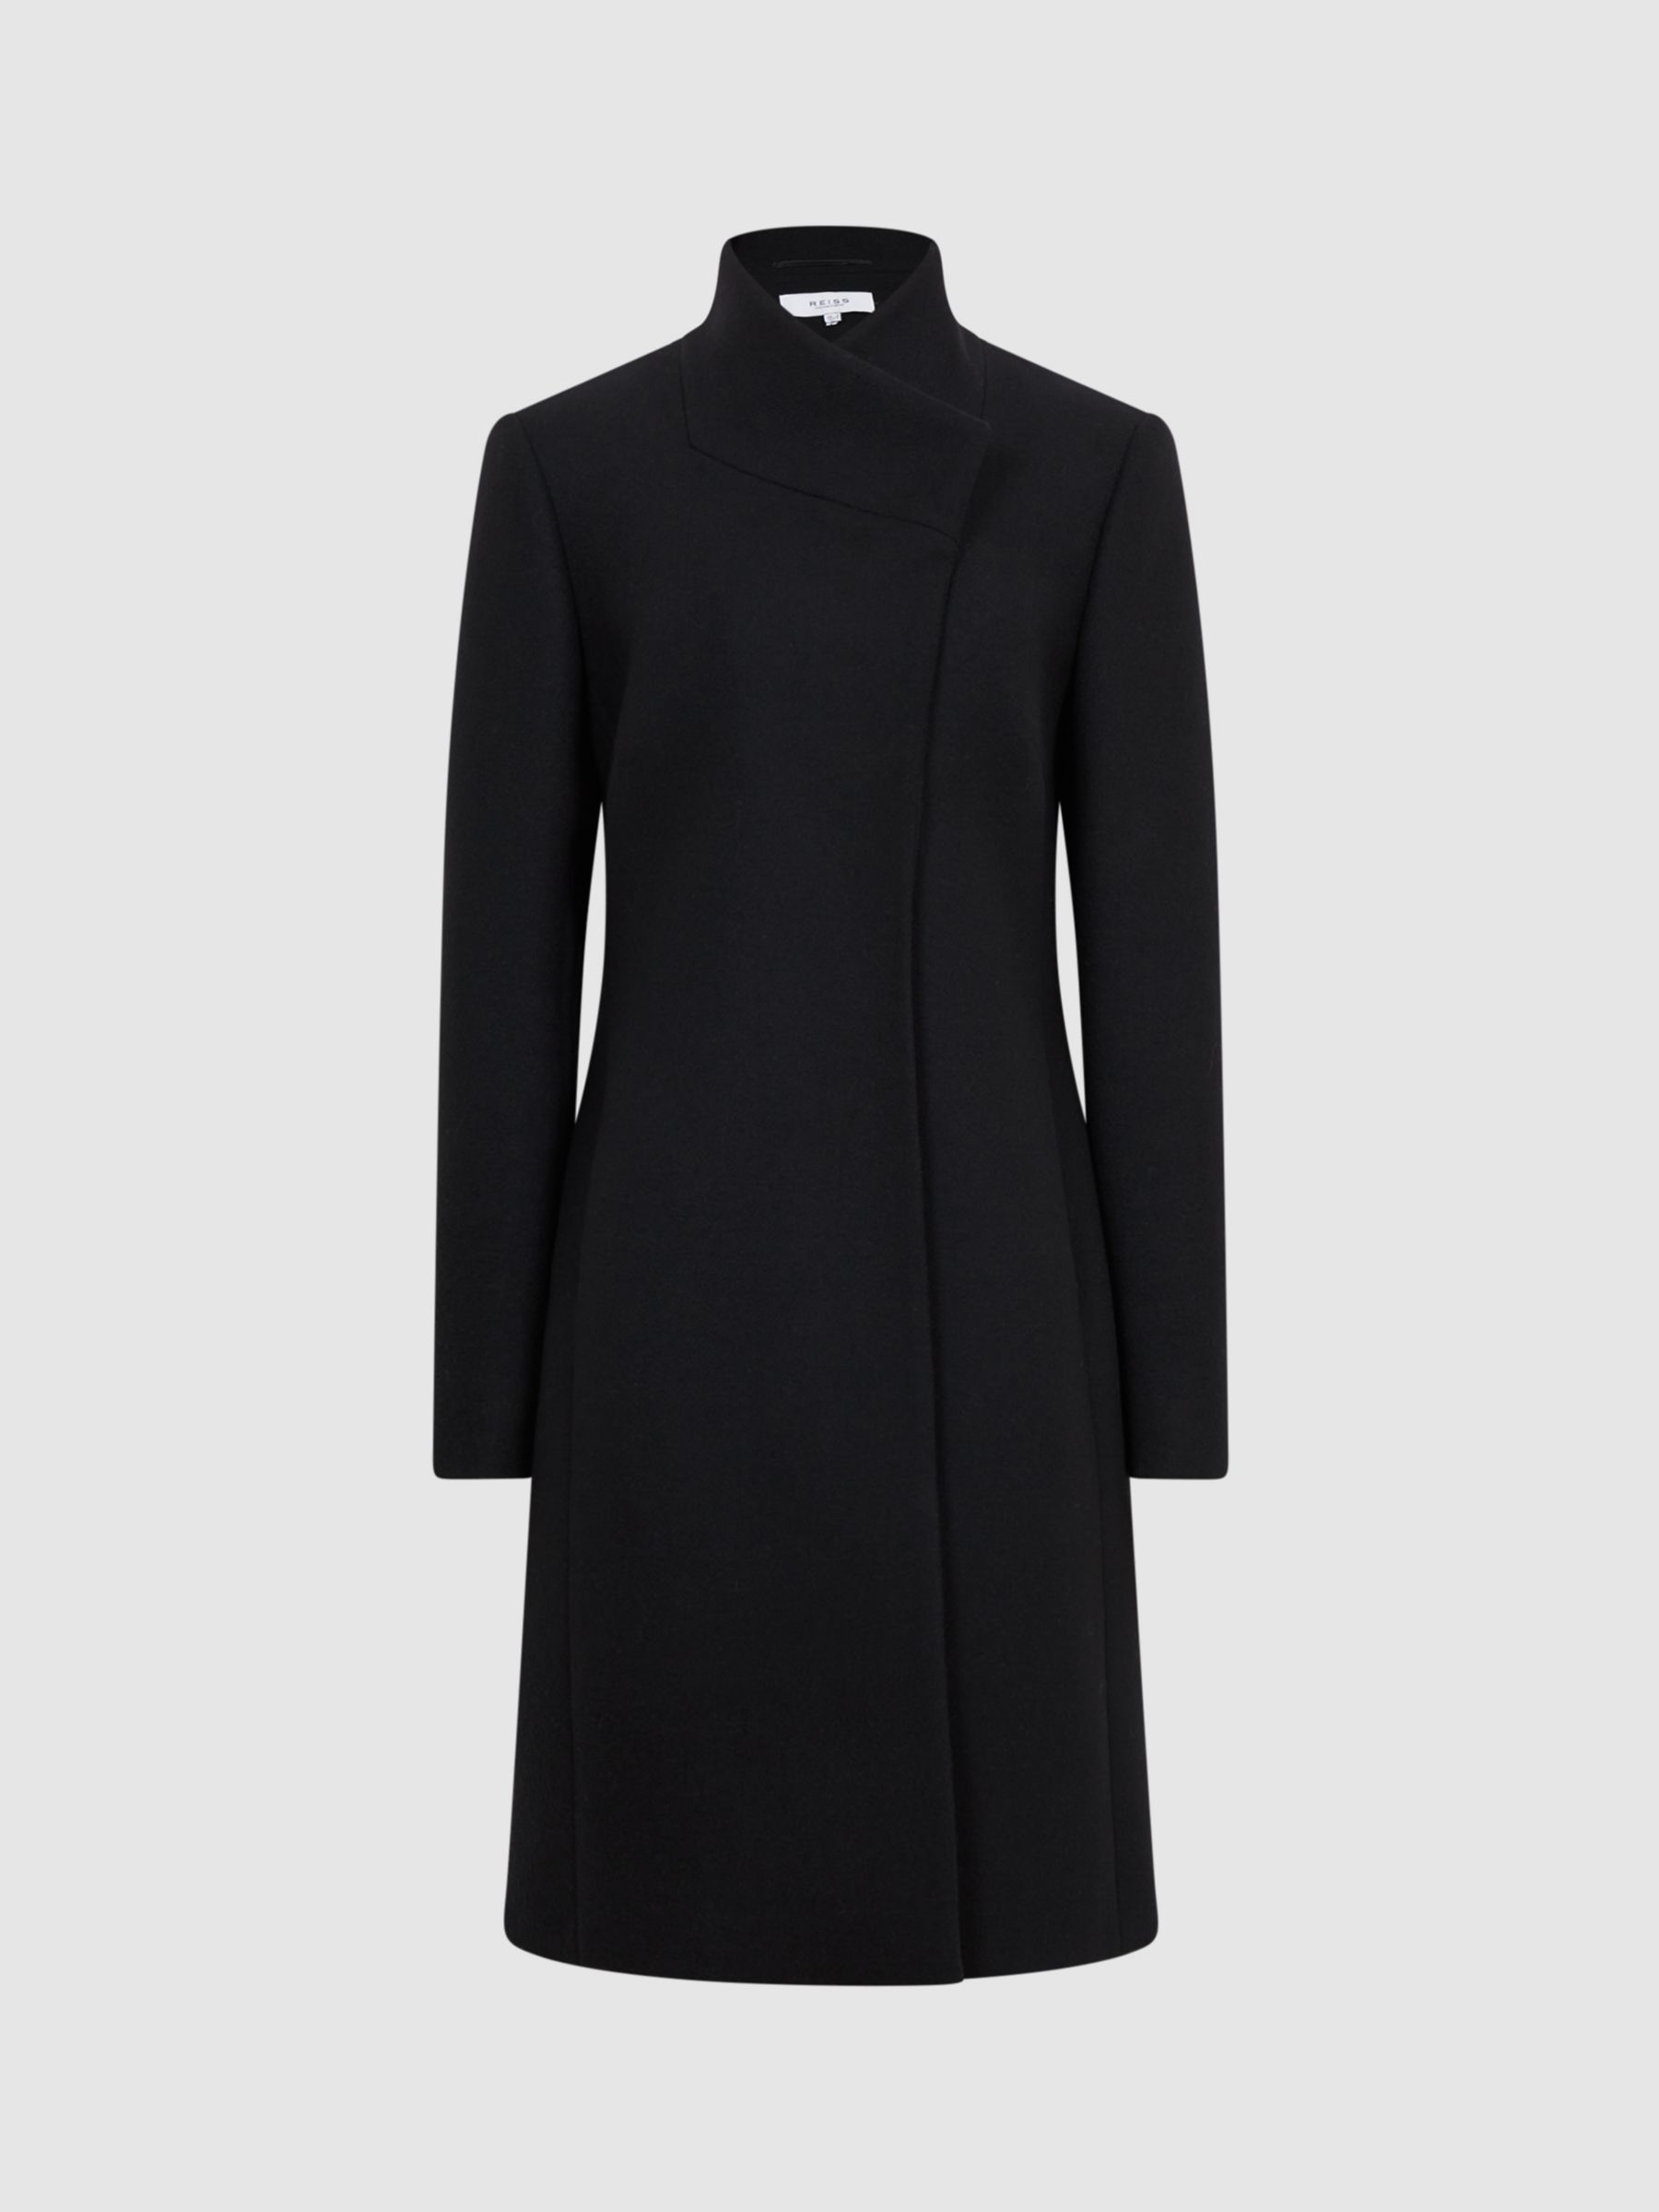 Reiss Mia Wool Blend Tailored Coat, Black at John Lewis & Partners